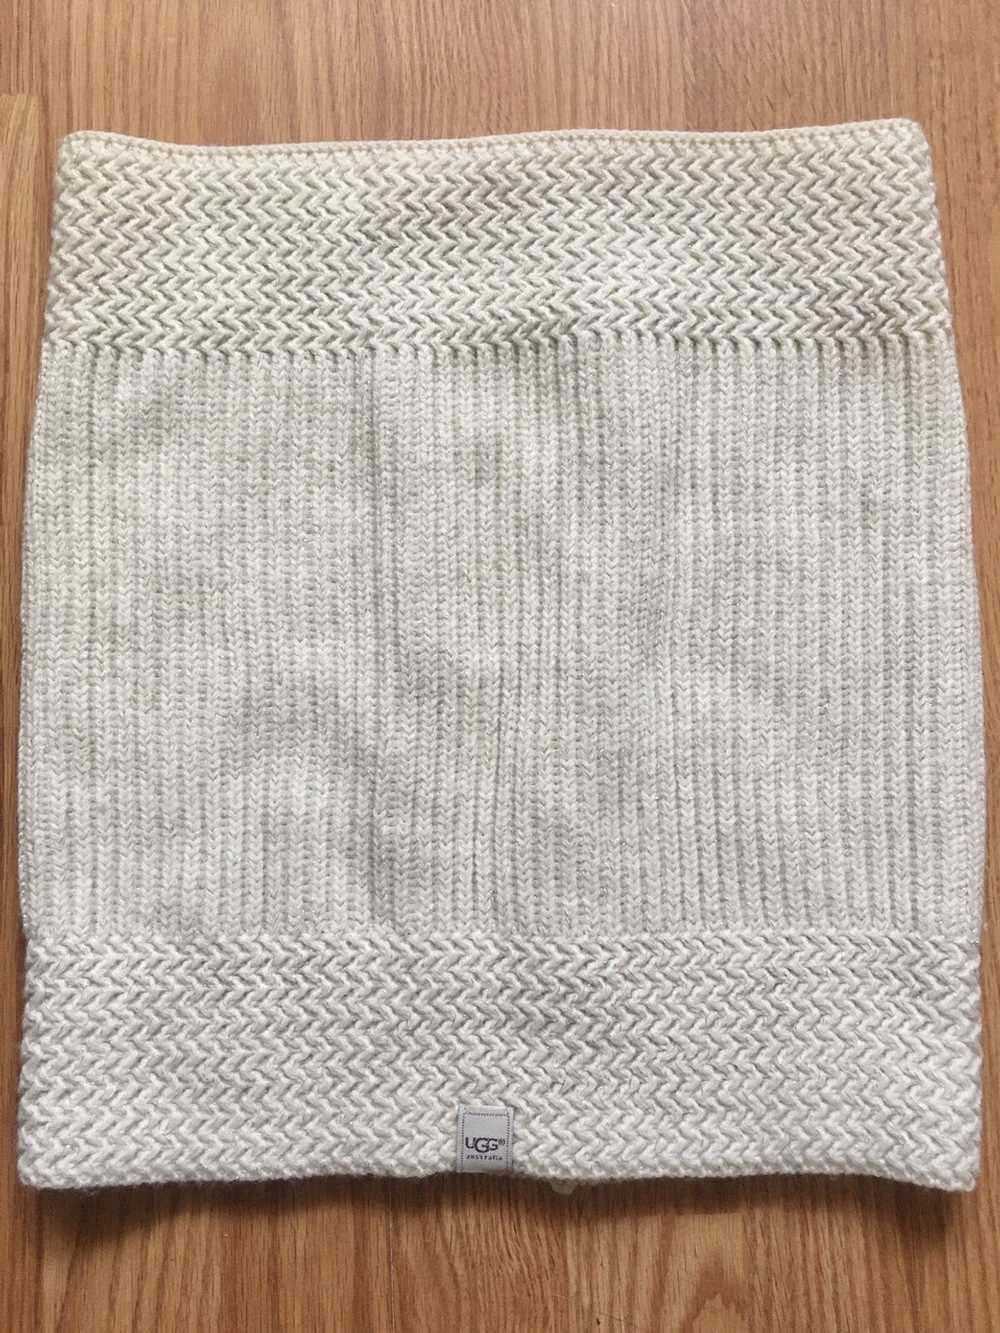 Ugg Woman’s UGG Australia Beige Knit Wool Snood S… - image 1